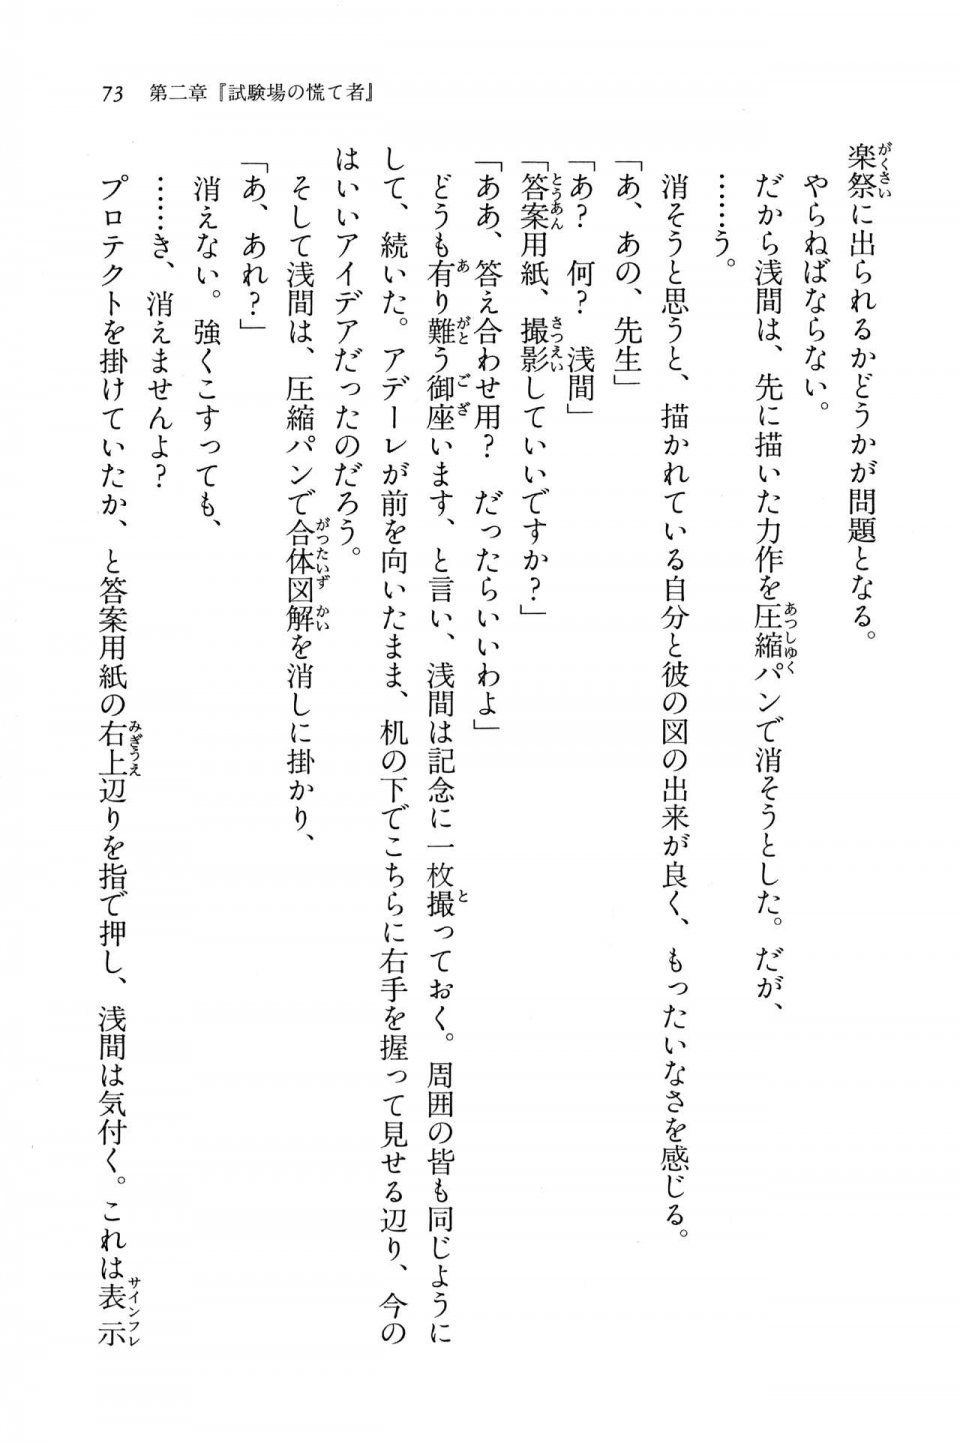 Kyoukai Senjou no Horizon BD Special Mininovel Vol 7(4A) - Photo #77